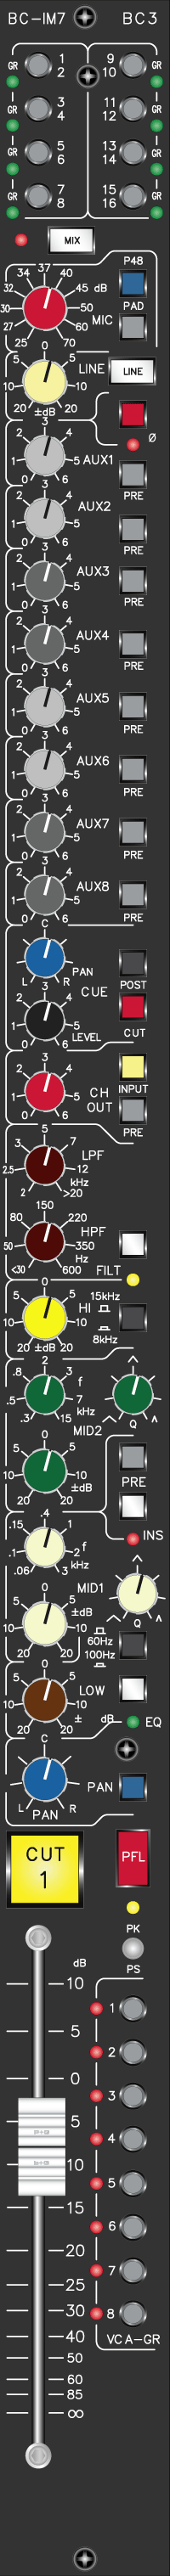 Live Sound Input Module  IM7 - Top Plate View